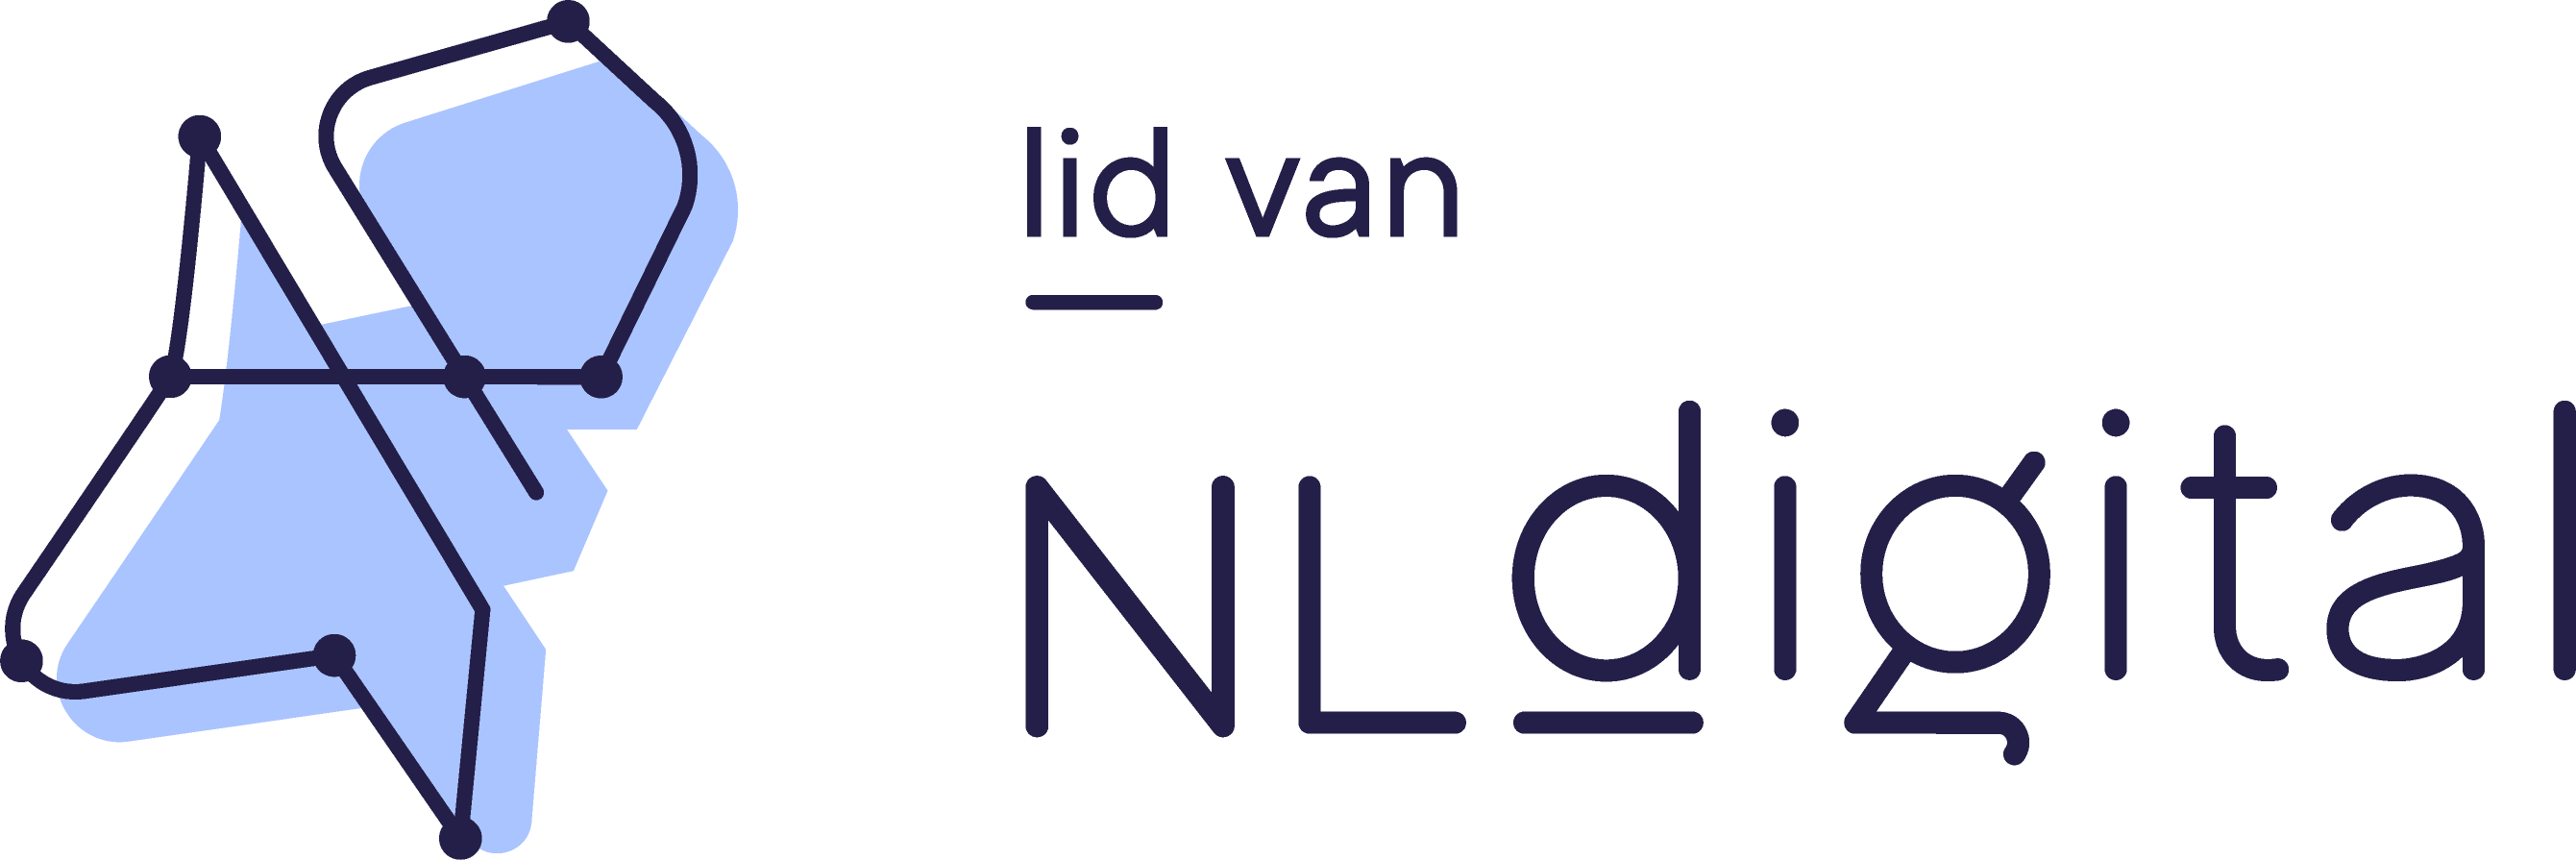 SIX ICT is lid van NL Digital